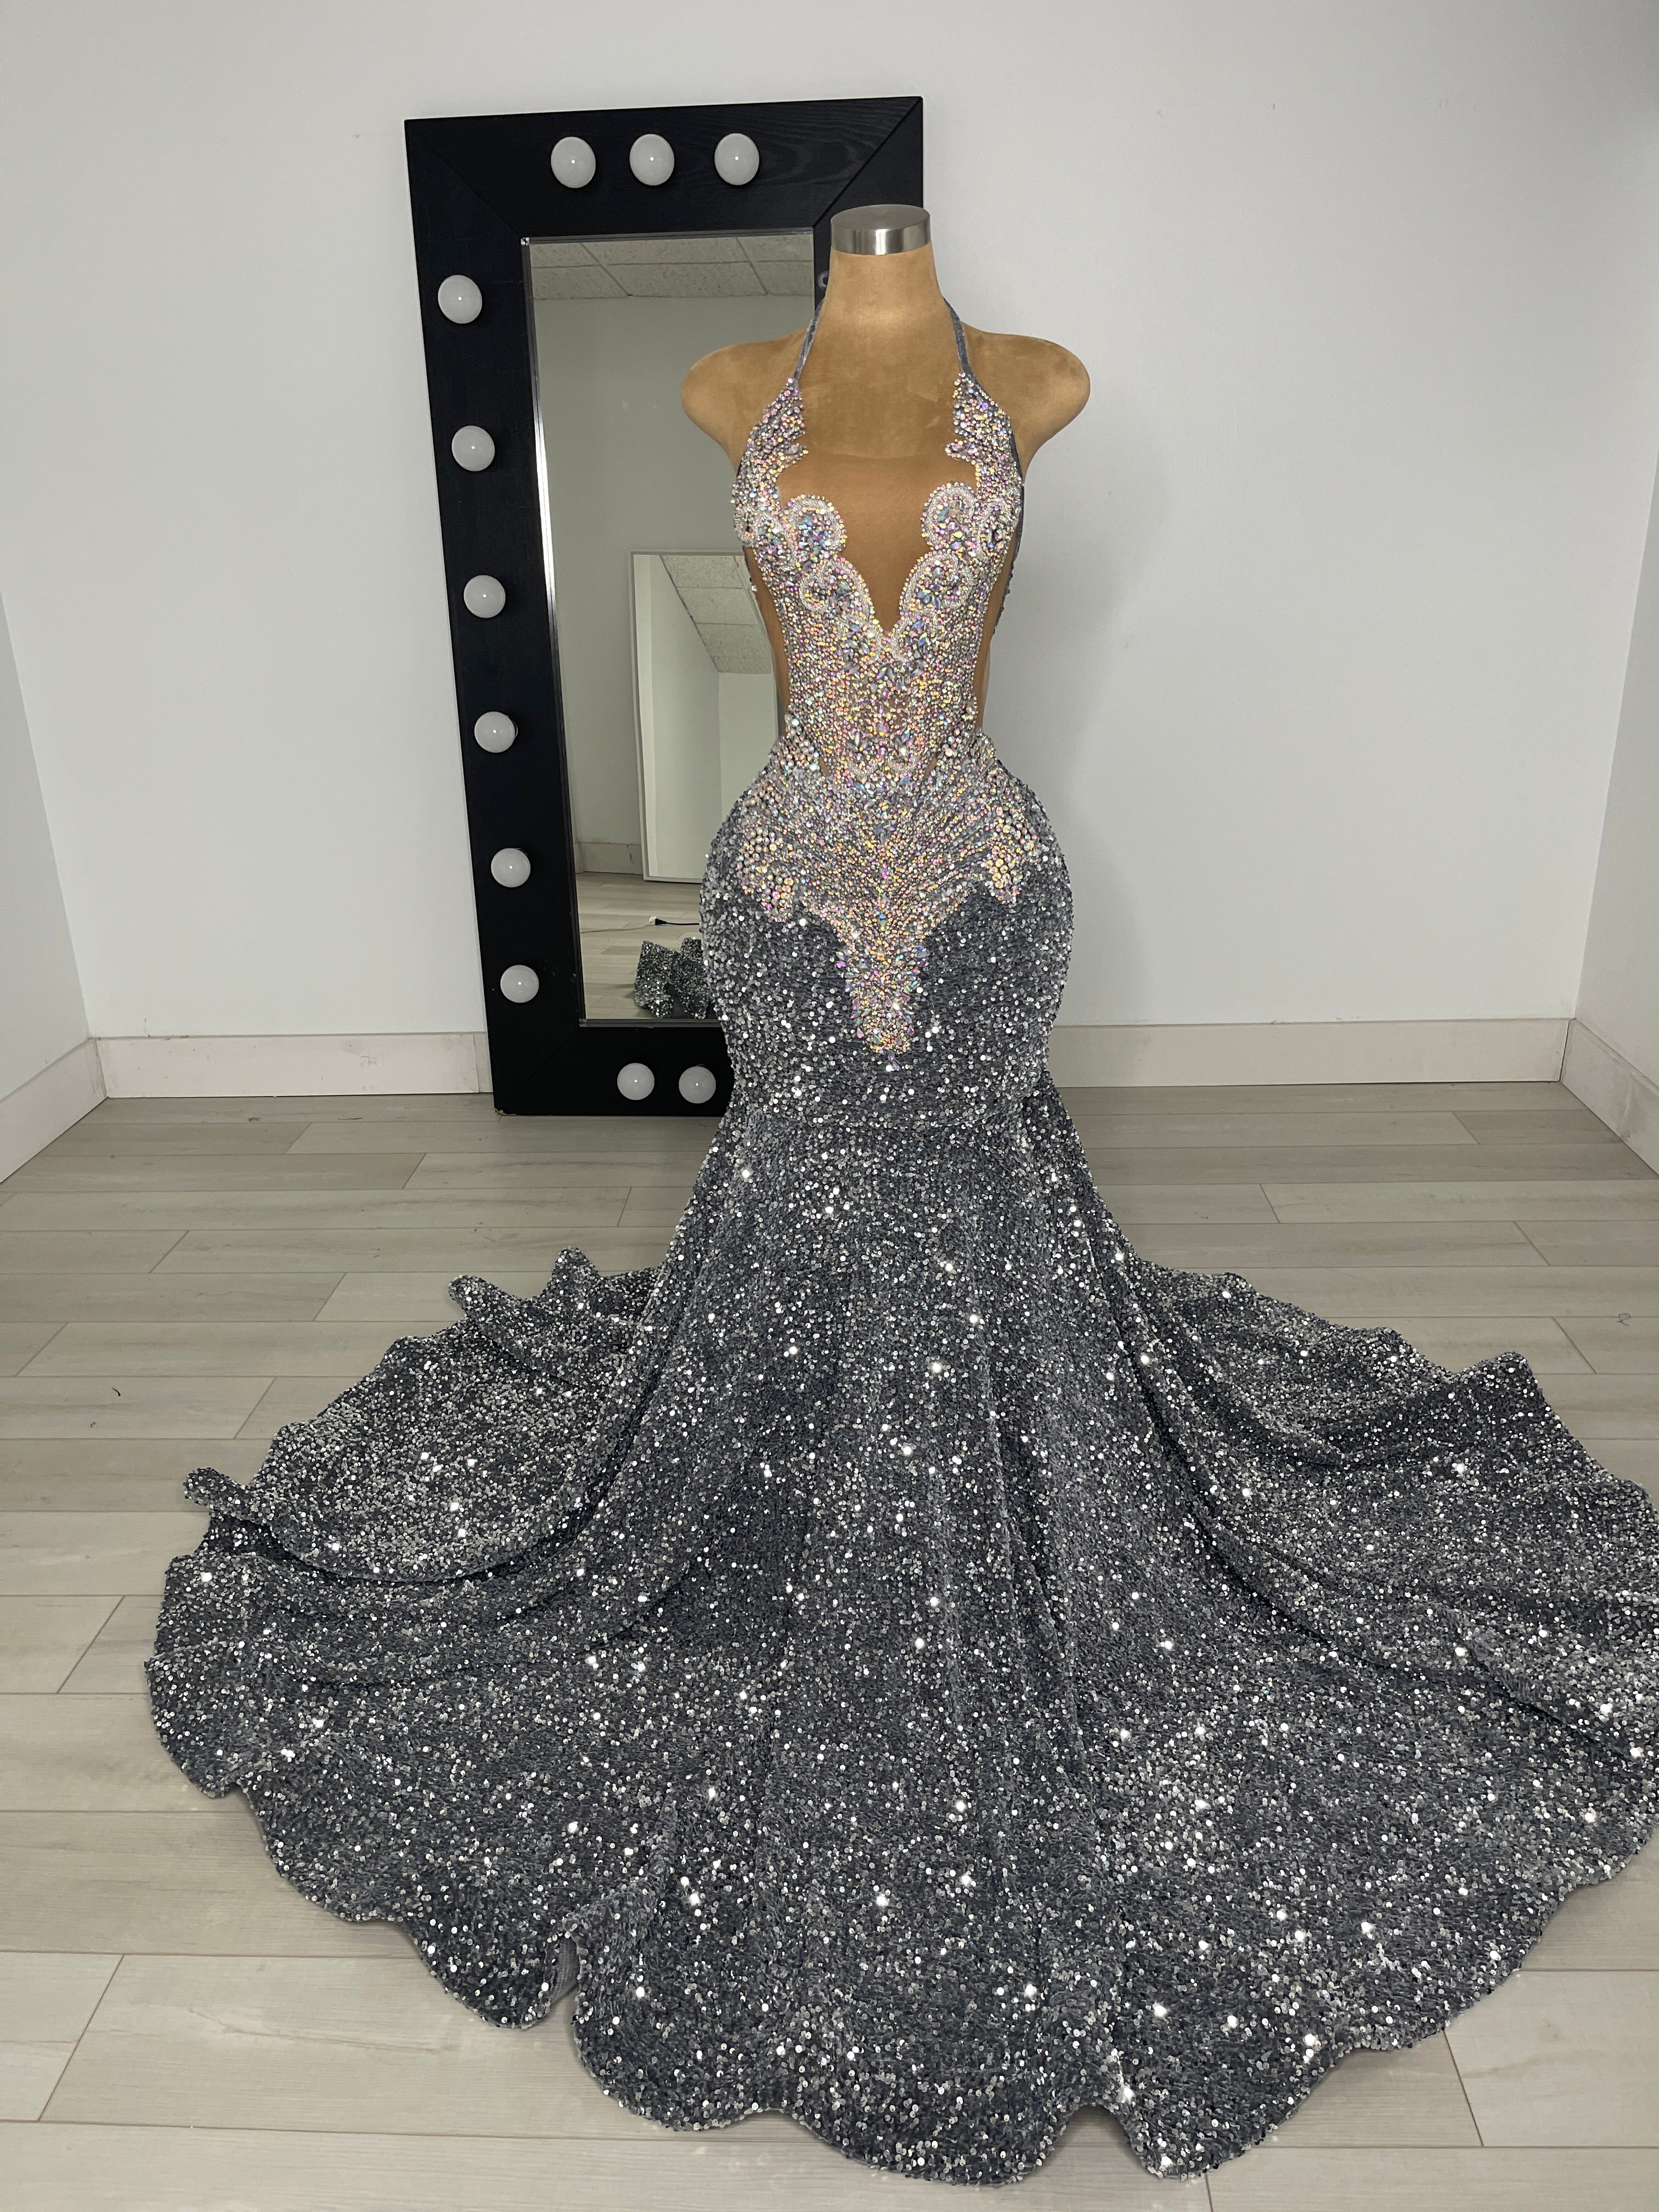 Jocelyn - HALTER STYLE Silver Sequins & Iridescent Rhinestone Prom Dress